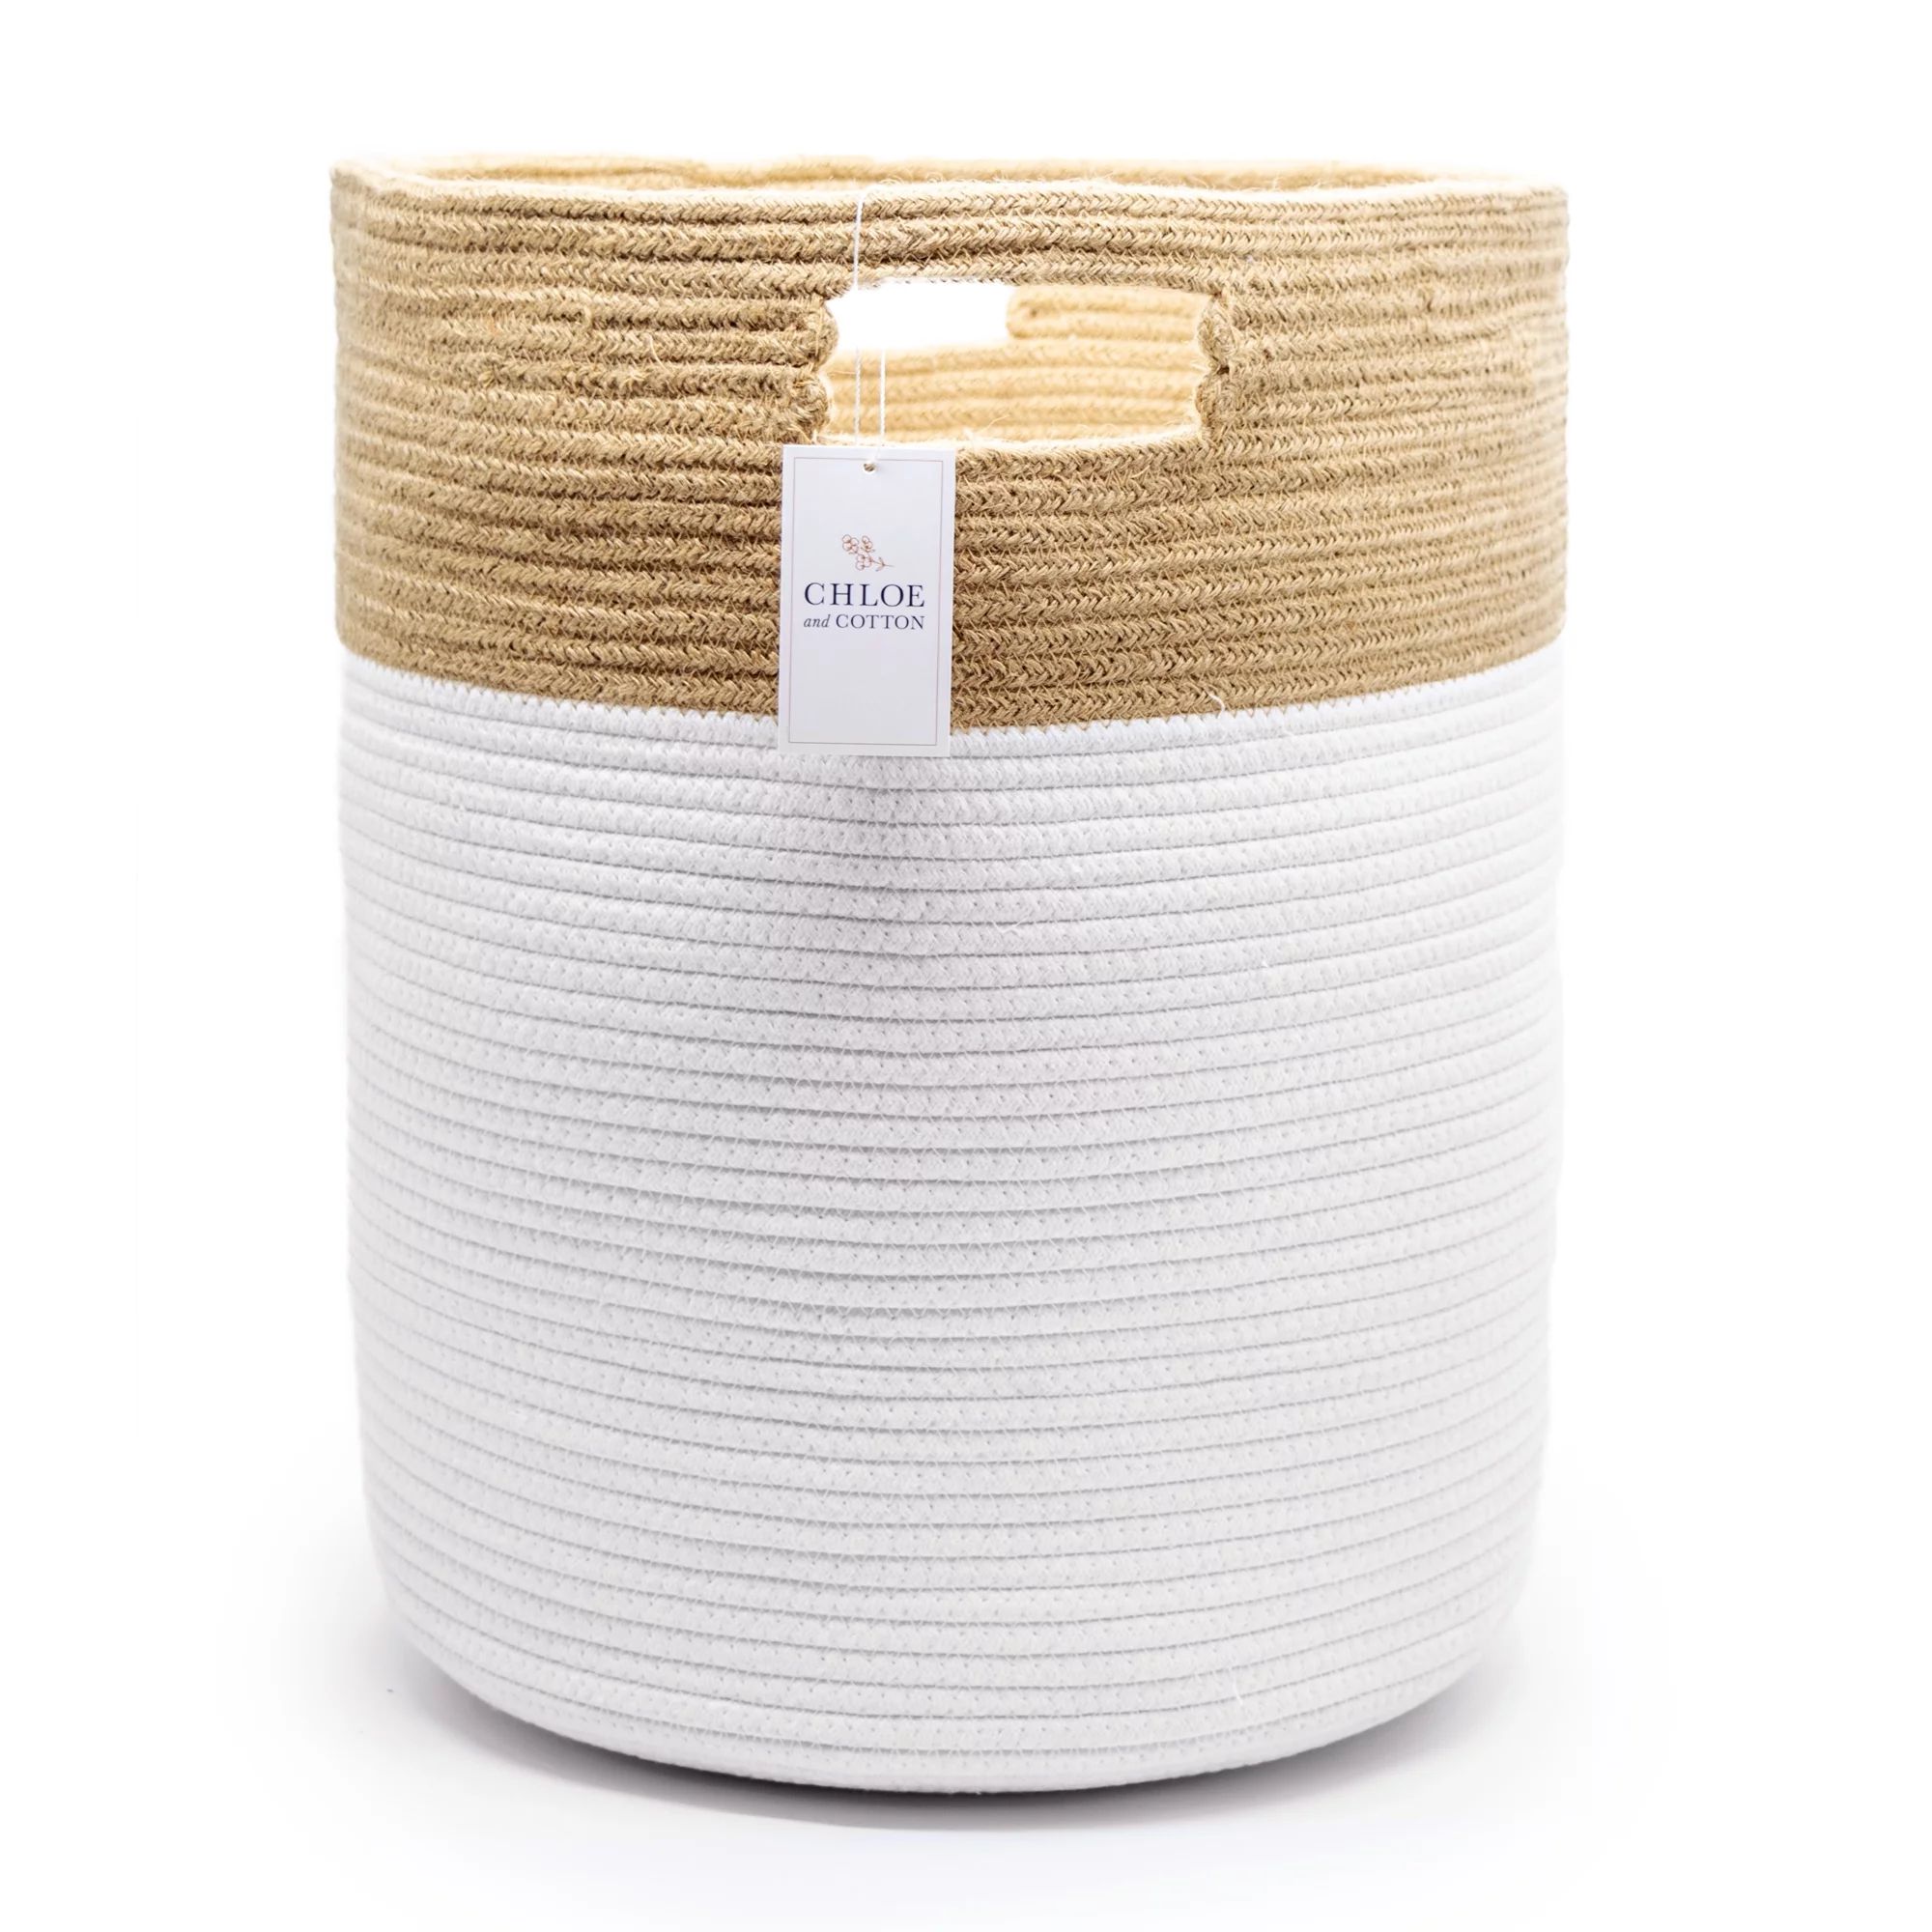 Chloe and Cotton Extra Large Woven Rope Laundry Basket, White Jute | Walmart (US)